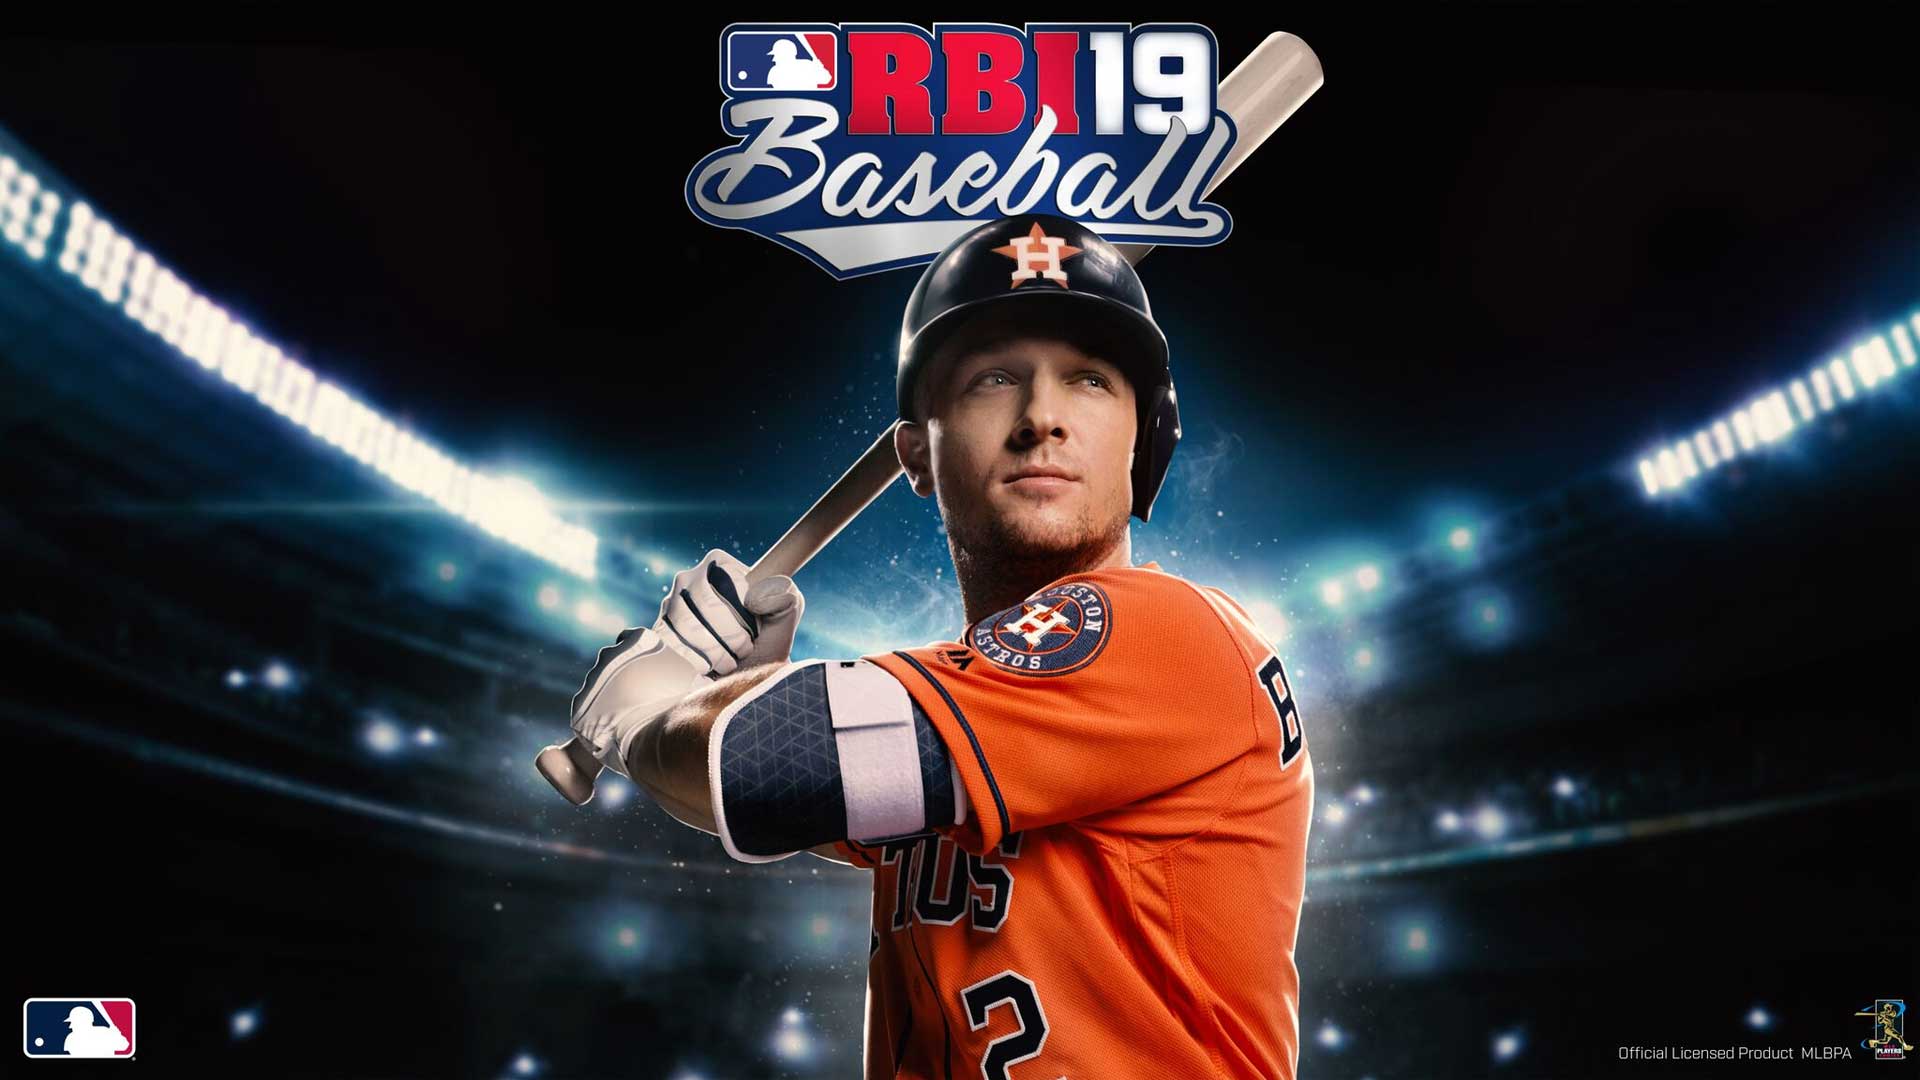 RBI Baseball 19 Nintendo Switch cover athlete